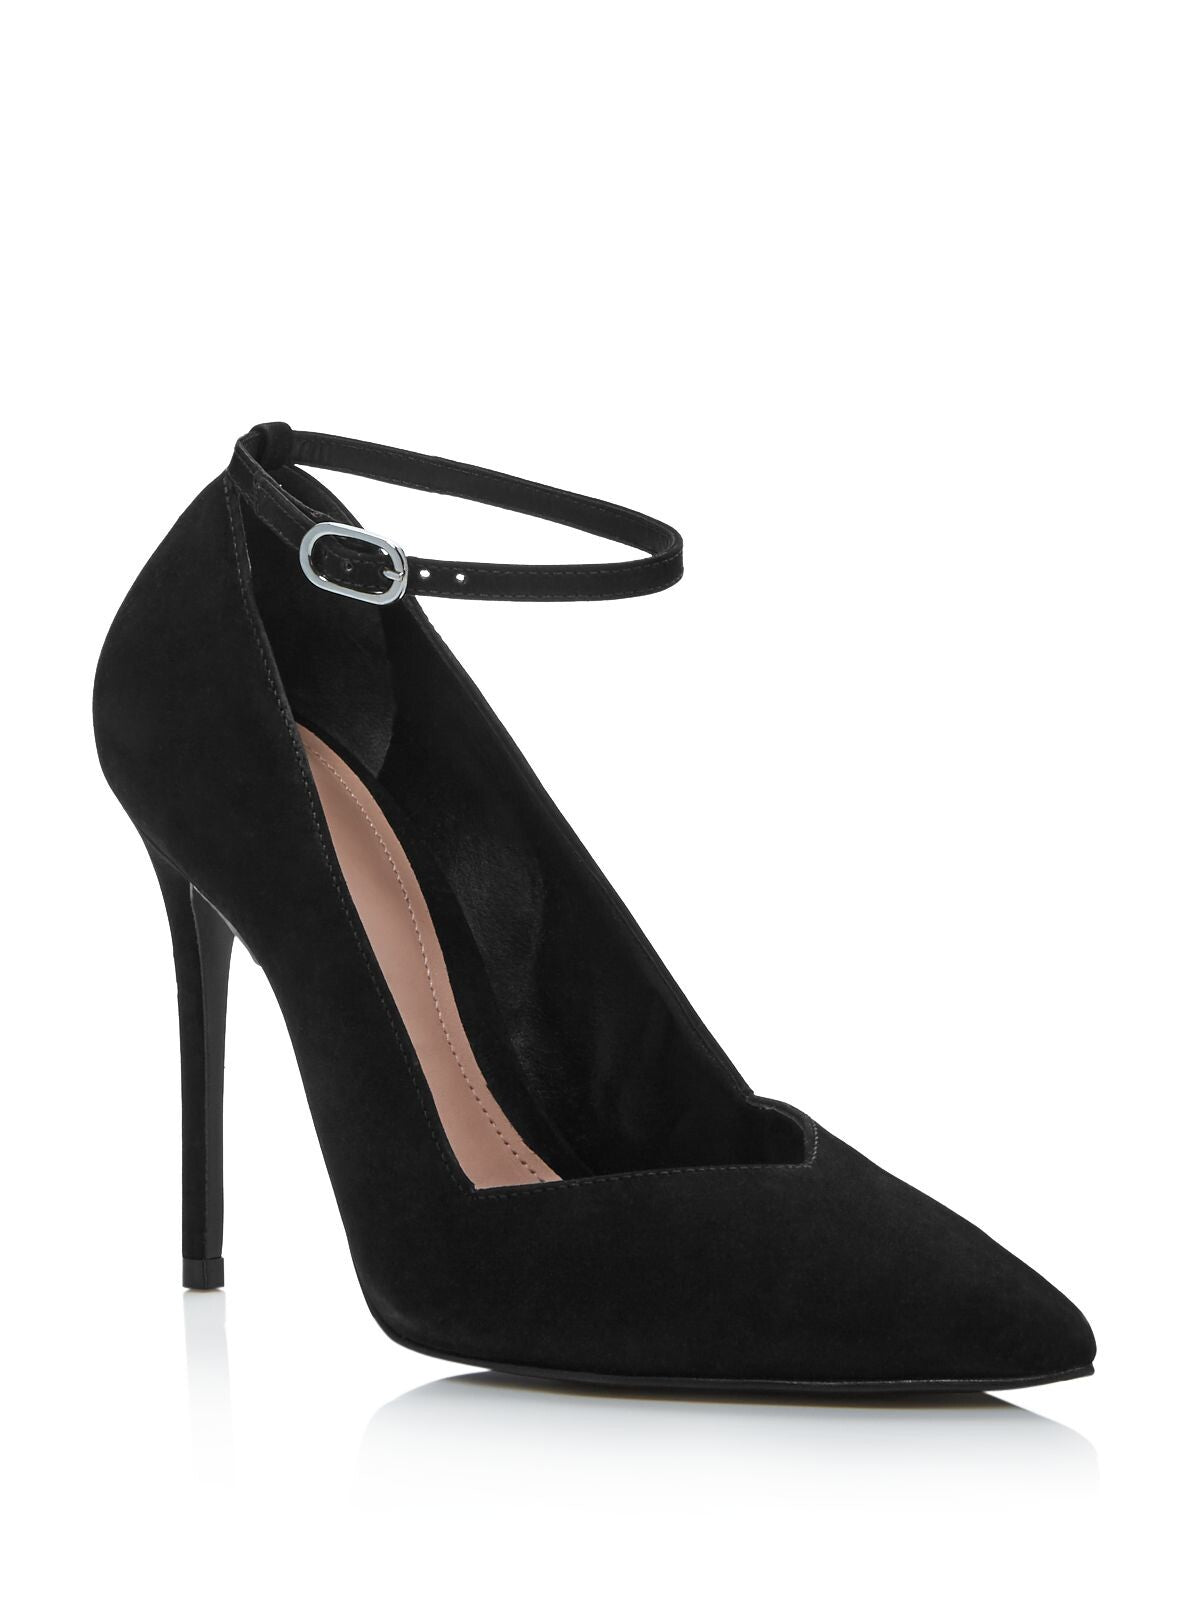 AQUA Womens Black Ankle Strap Comfort Kailana Pointed Toe Stiletto Buckle Dress Pumps Shoes 6 B